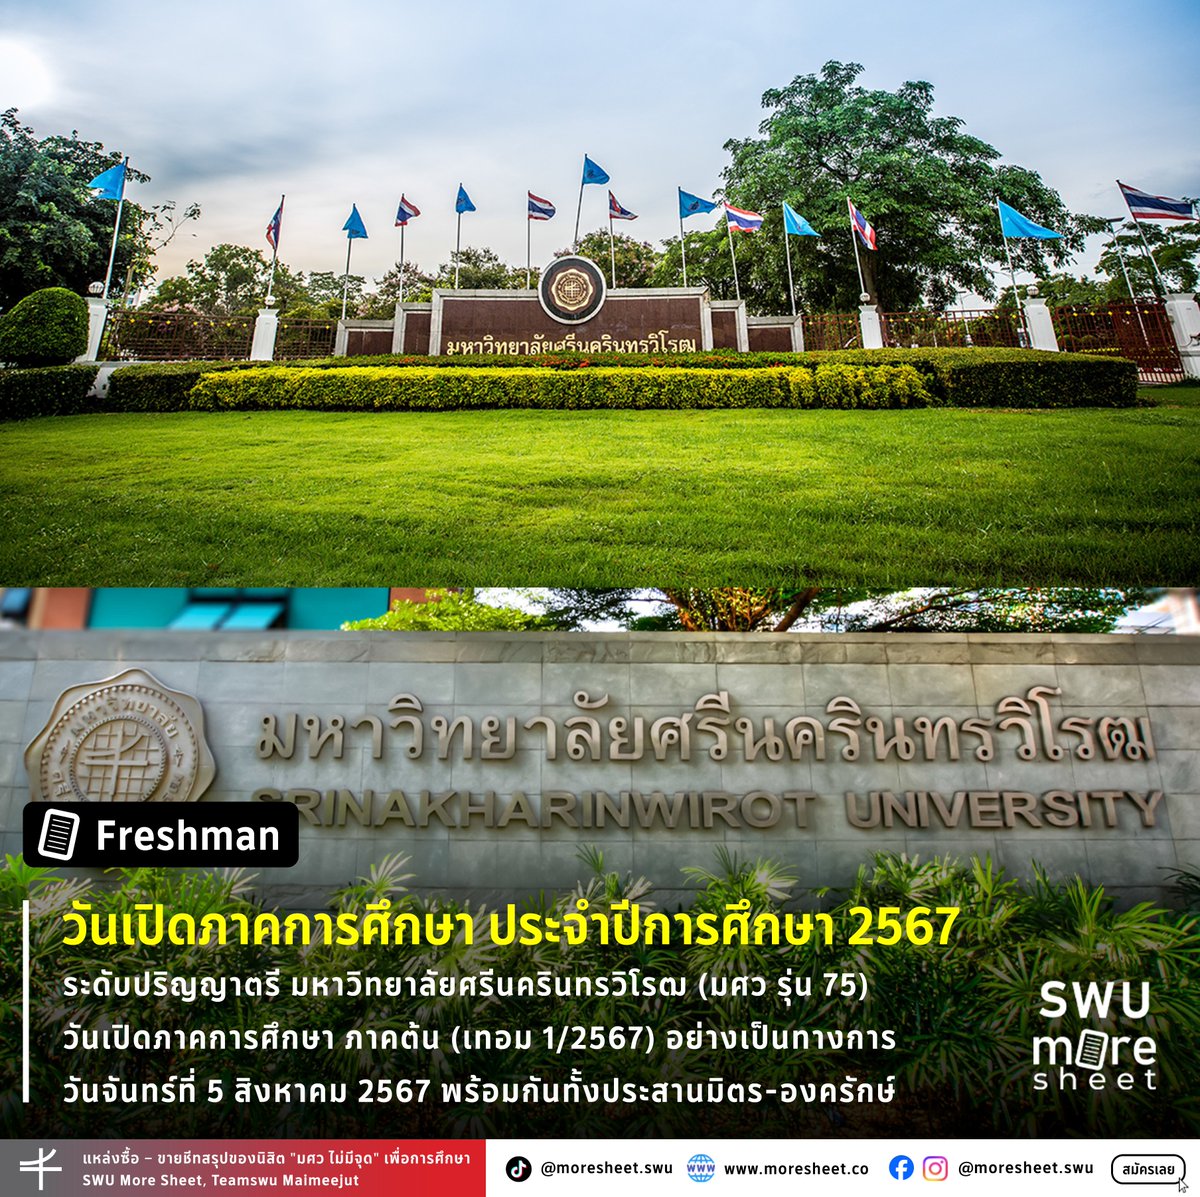 📝[Freshman] วันเปิดภาคการศึกษา ประจำปีการศึกษา 2567
ระดับปริญญาตรี มหาวิทยาลัยศรีนครินทรวิโรฒ
วันเปิดภาคการศึกษา ภาคต้น (เทอม 1/2567) อย่างเป็นทางการ
วันจันทร์ที่ 5 สิงหาคม 2567 พร้อมกันทั้งประสานมิตร-องครักษ์

#ทีมมศว #SWUmoresheet
#DEK67 #TCAS67 #SWU75